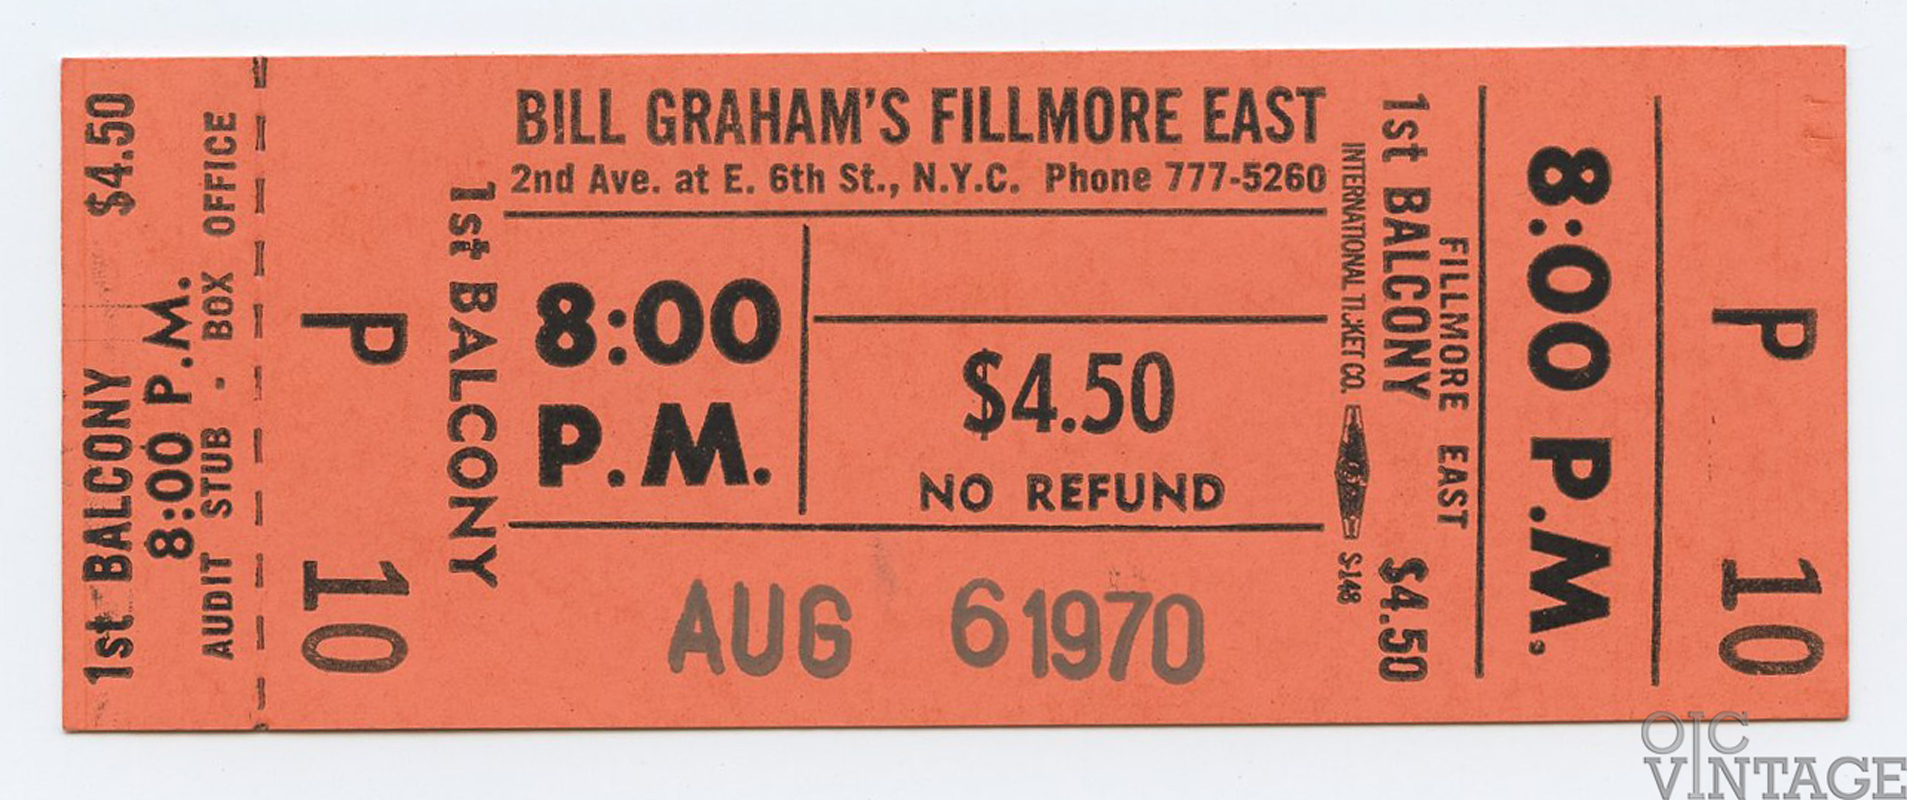 Bill Graham Fillmore East Vintage Ticket 1970 Aug 6 cancelled Concert Unsued